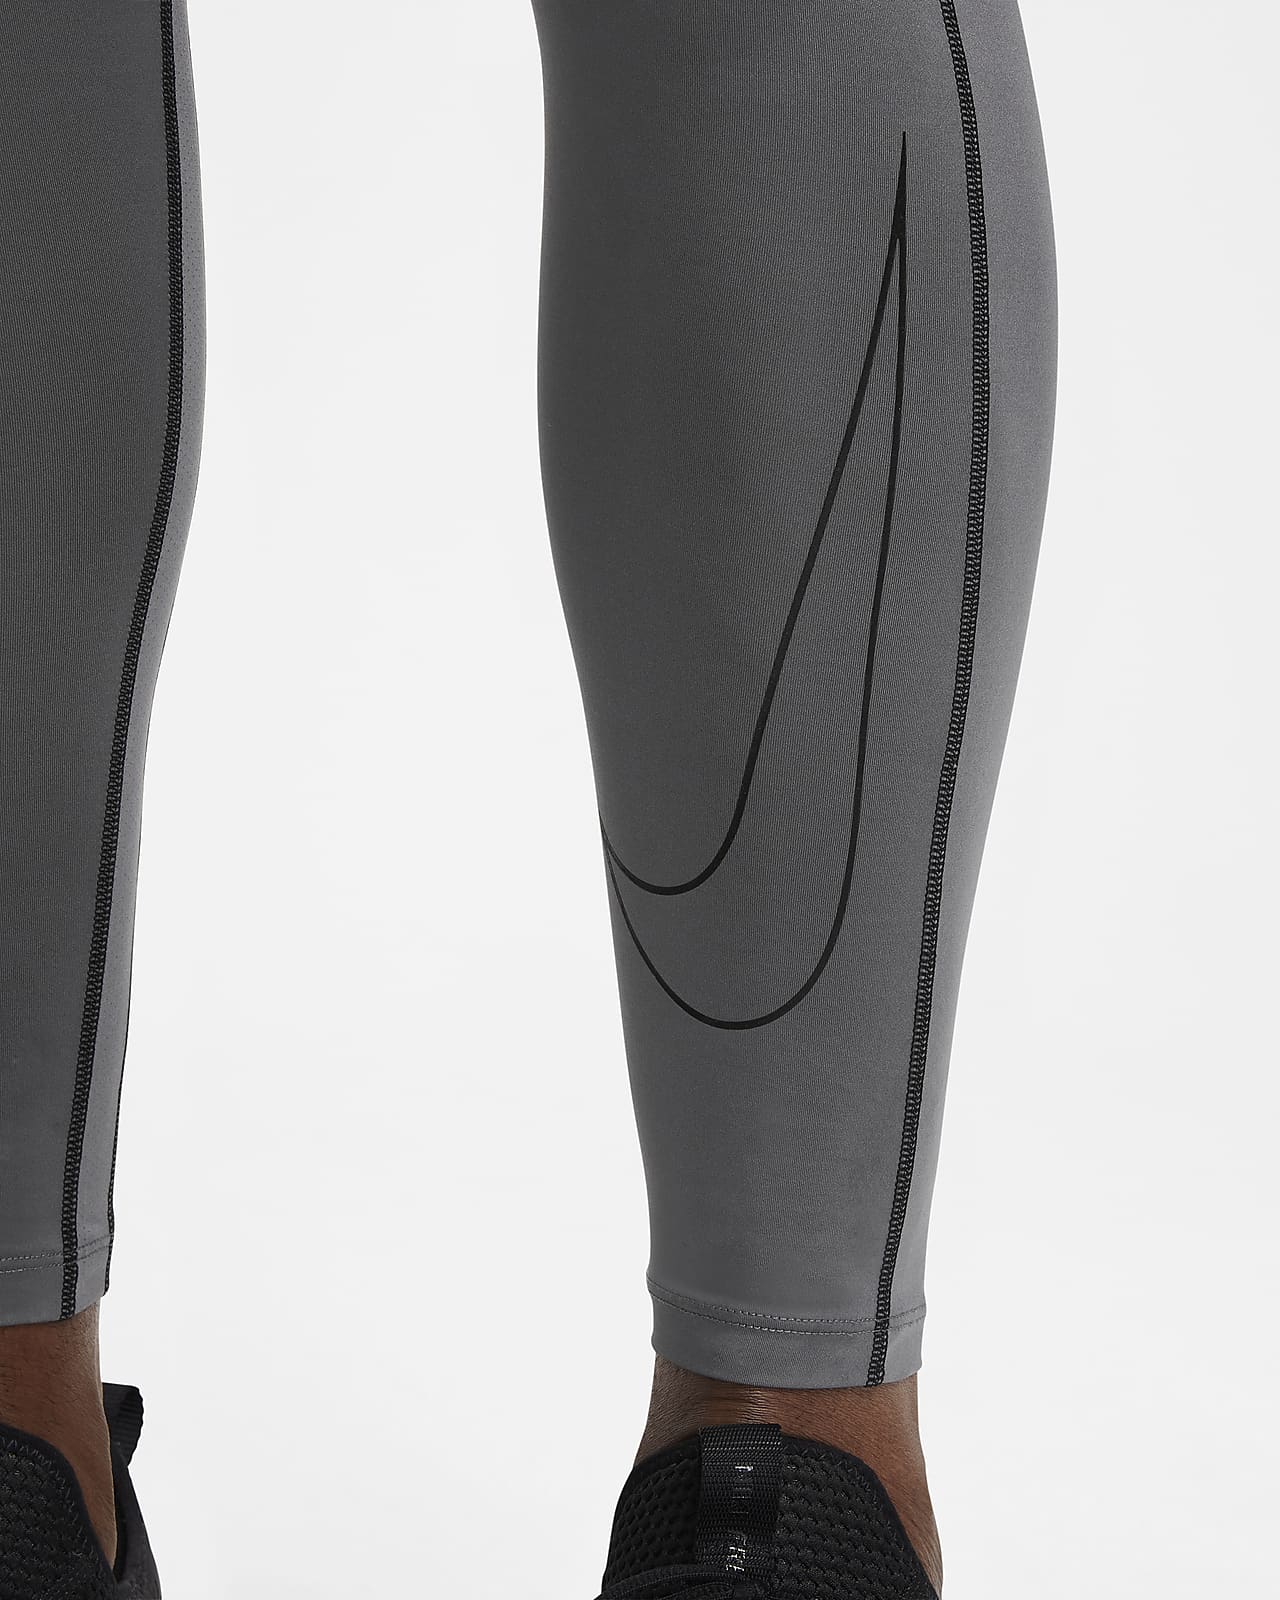 Nike Pro Tights Black Men's Athletics Compression Tight Pants Size M  BV5641-010